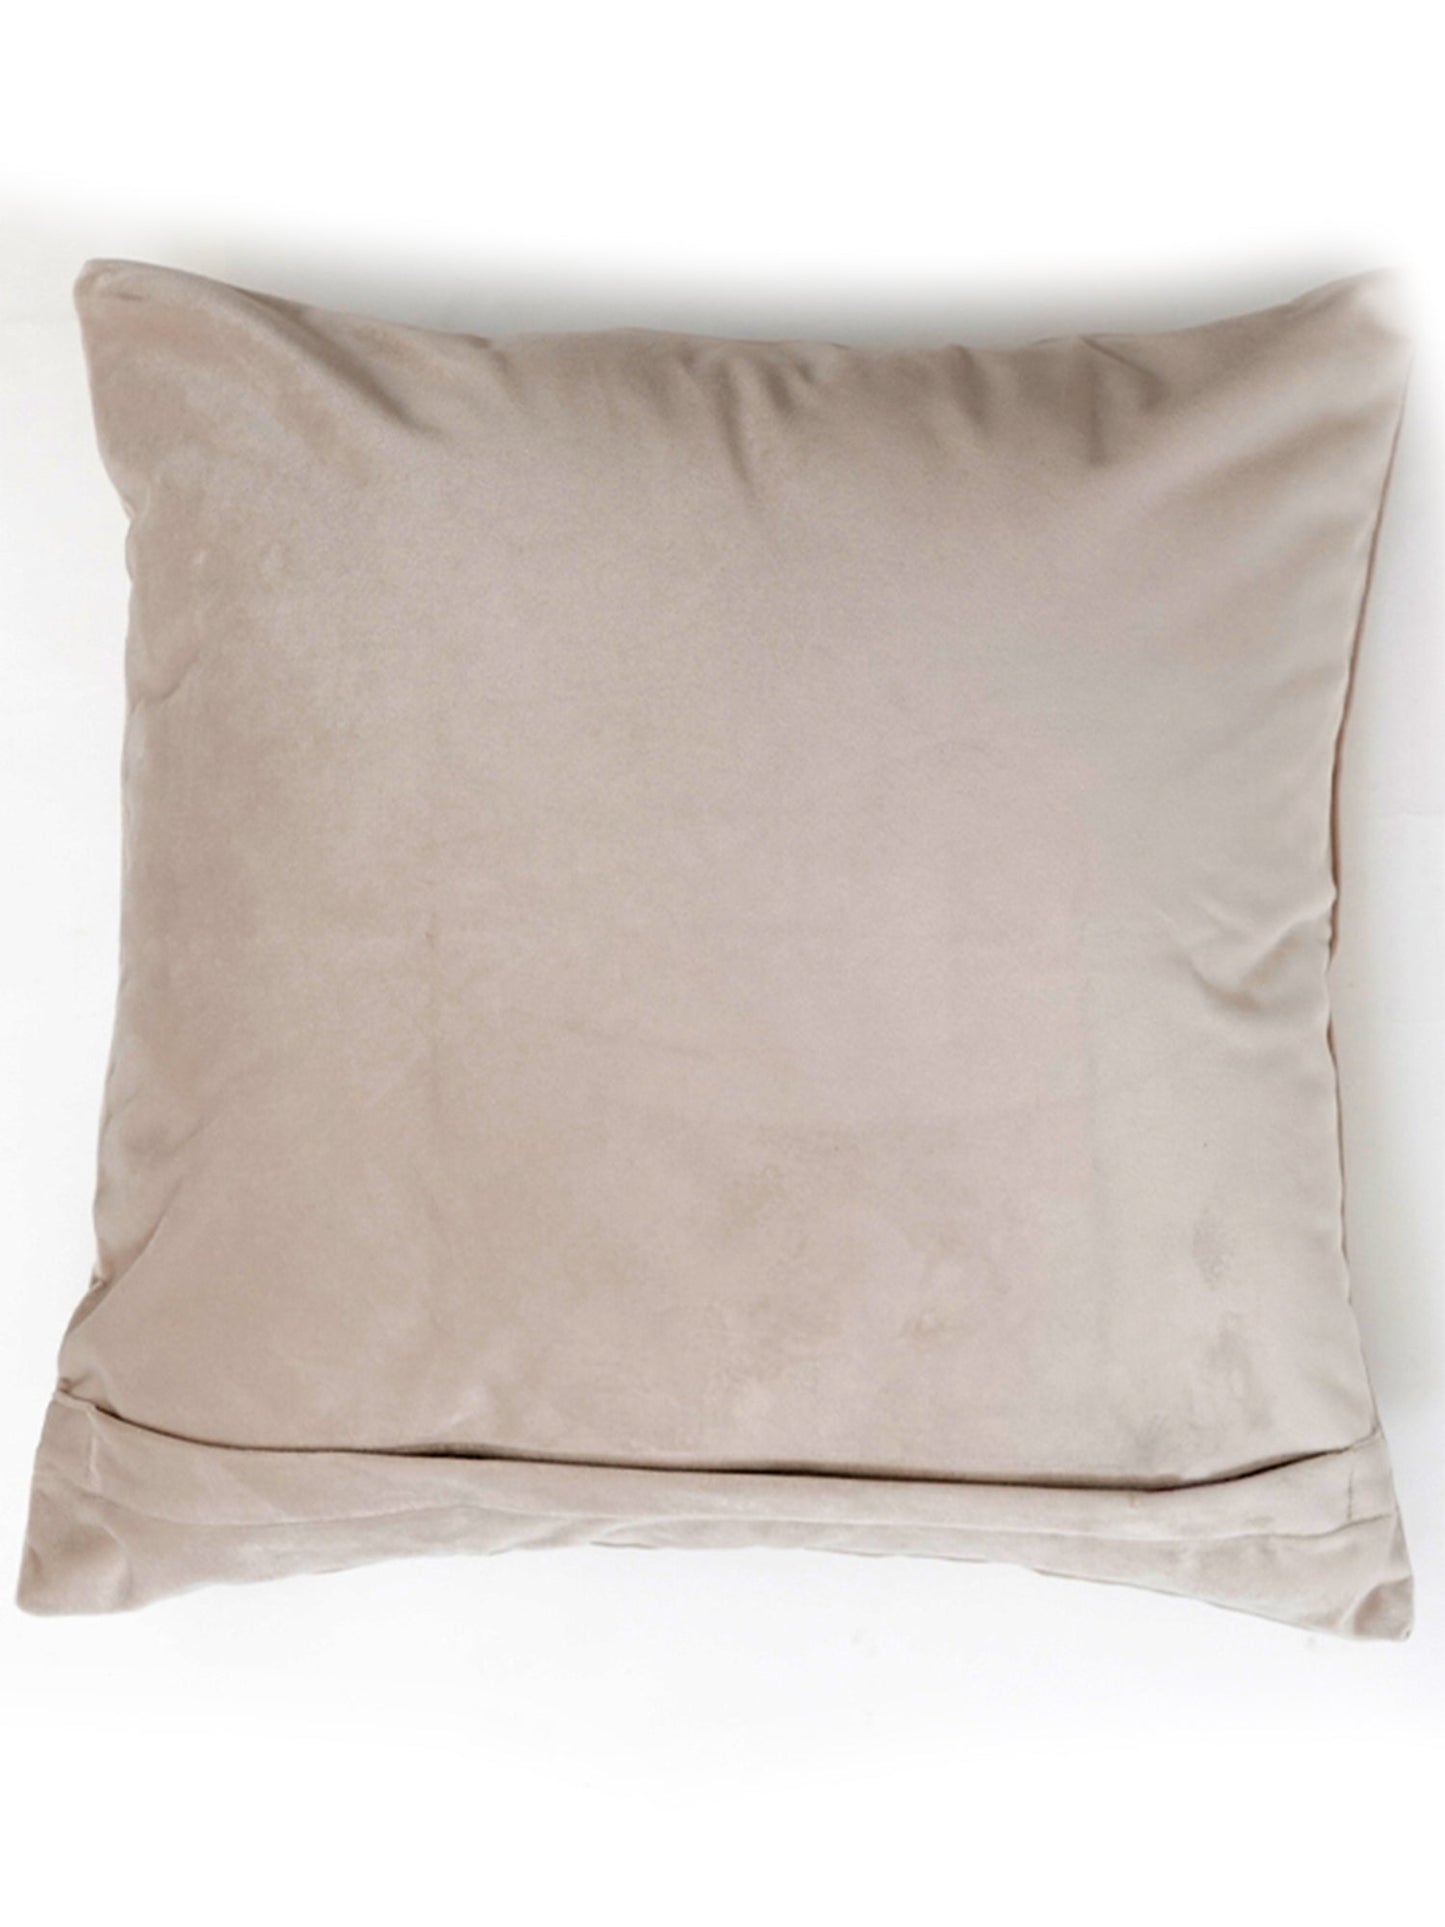 Embroidered Cushion Cover Velvet  Off White - 16" X 16"